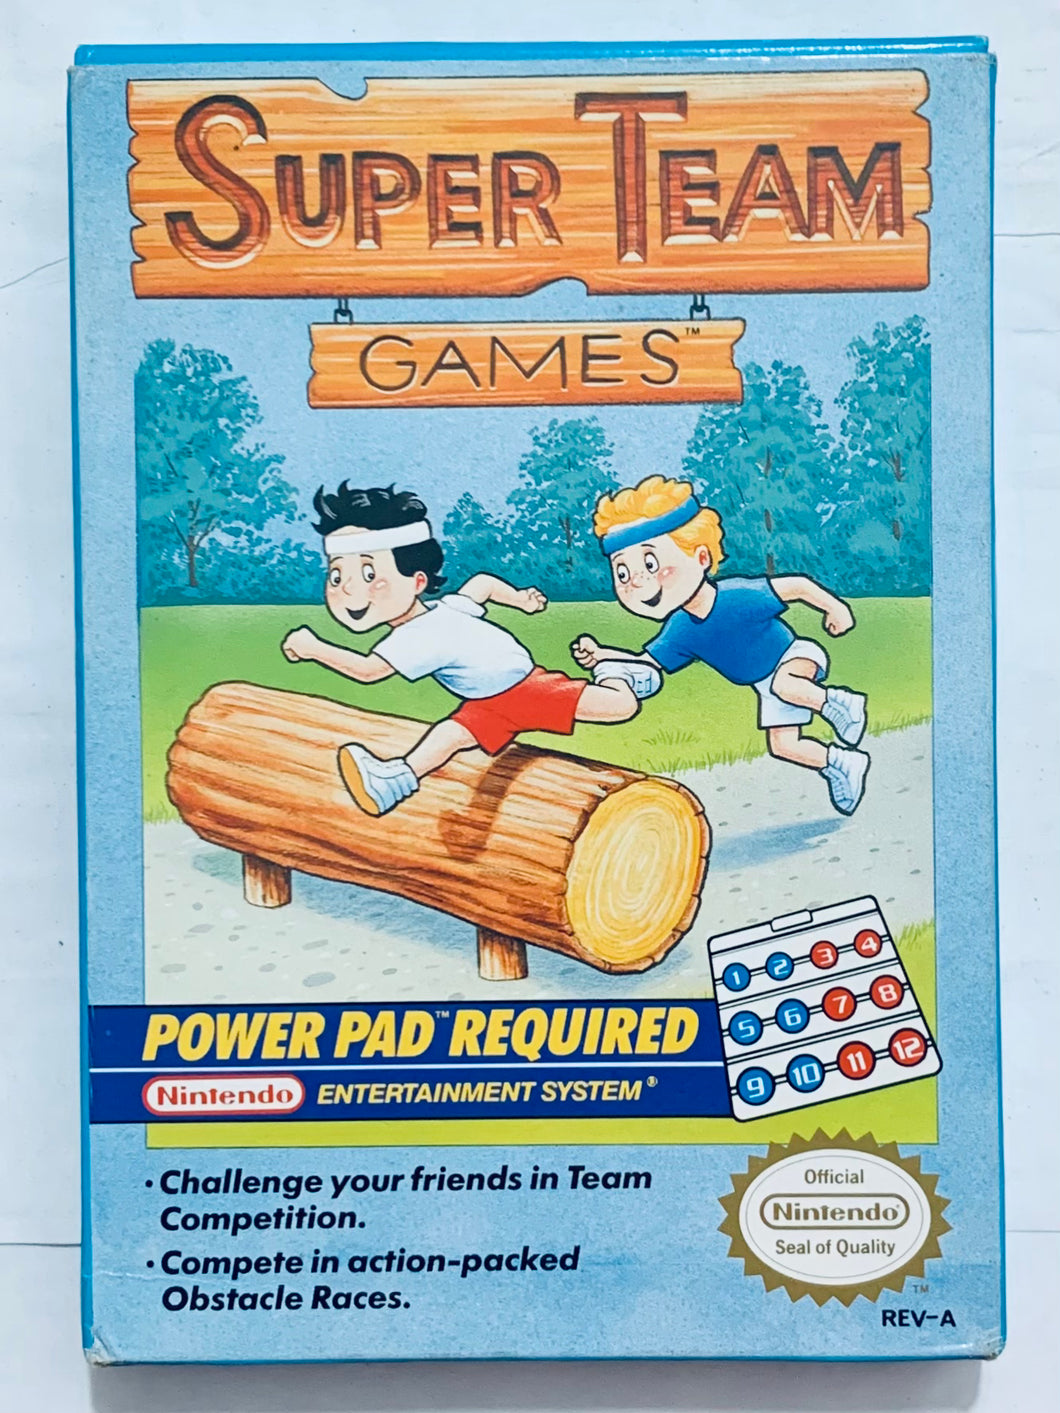 Super Team Games - Nintendo Entertainment System - NES - NTSC-US - CIB (REV-A / NES-UN-USA)